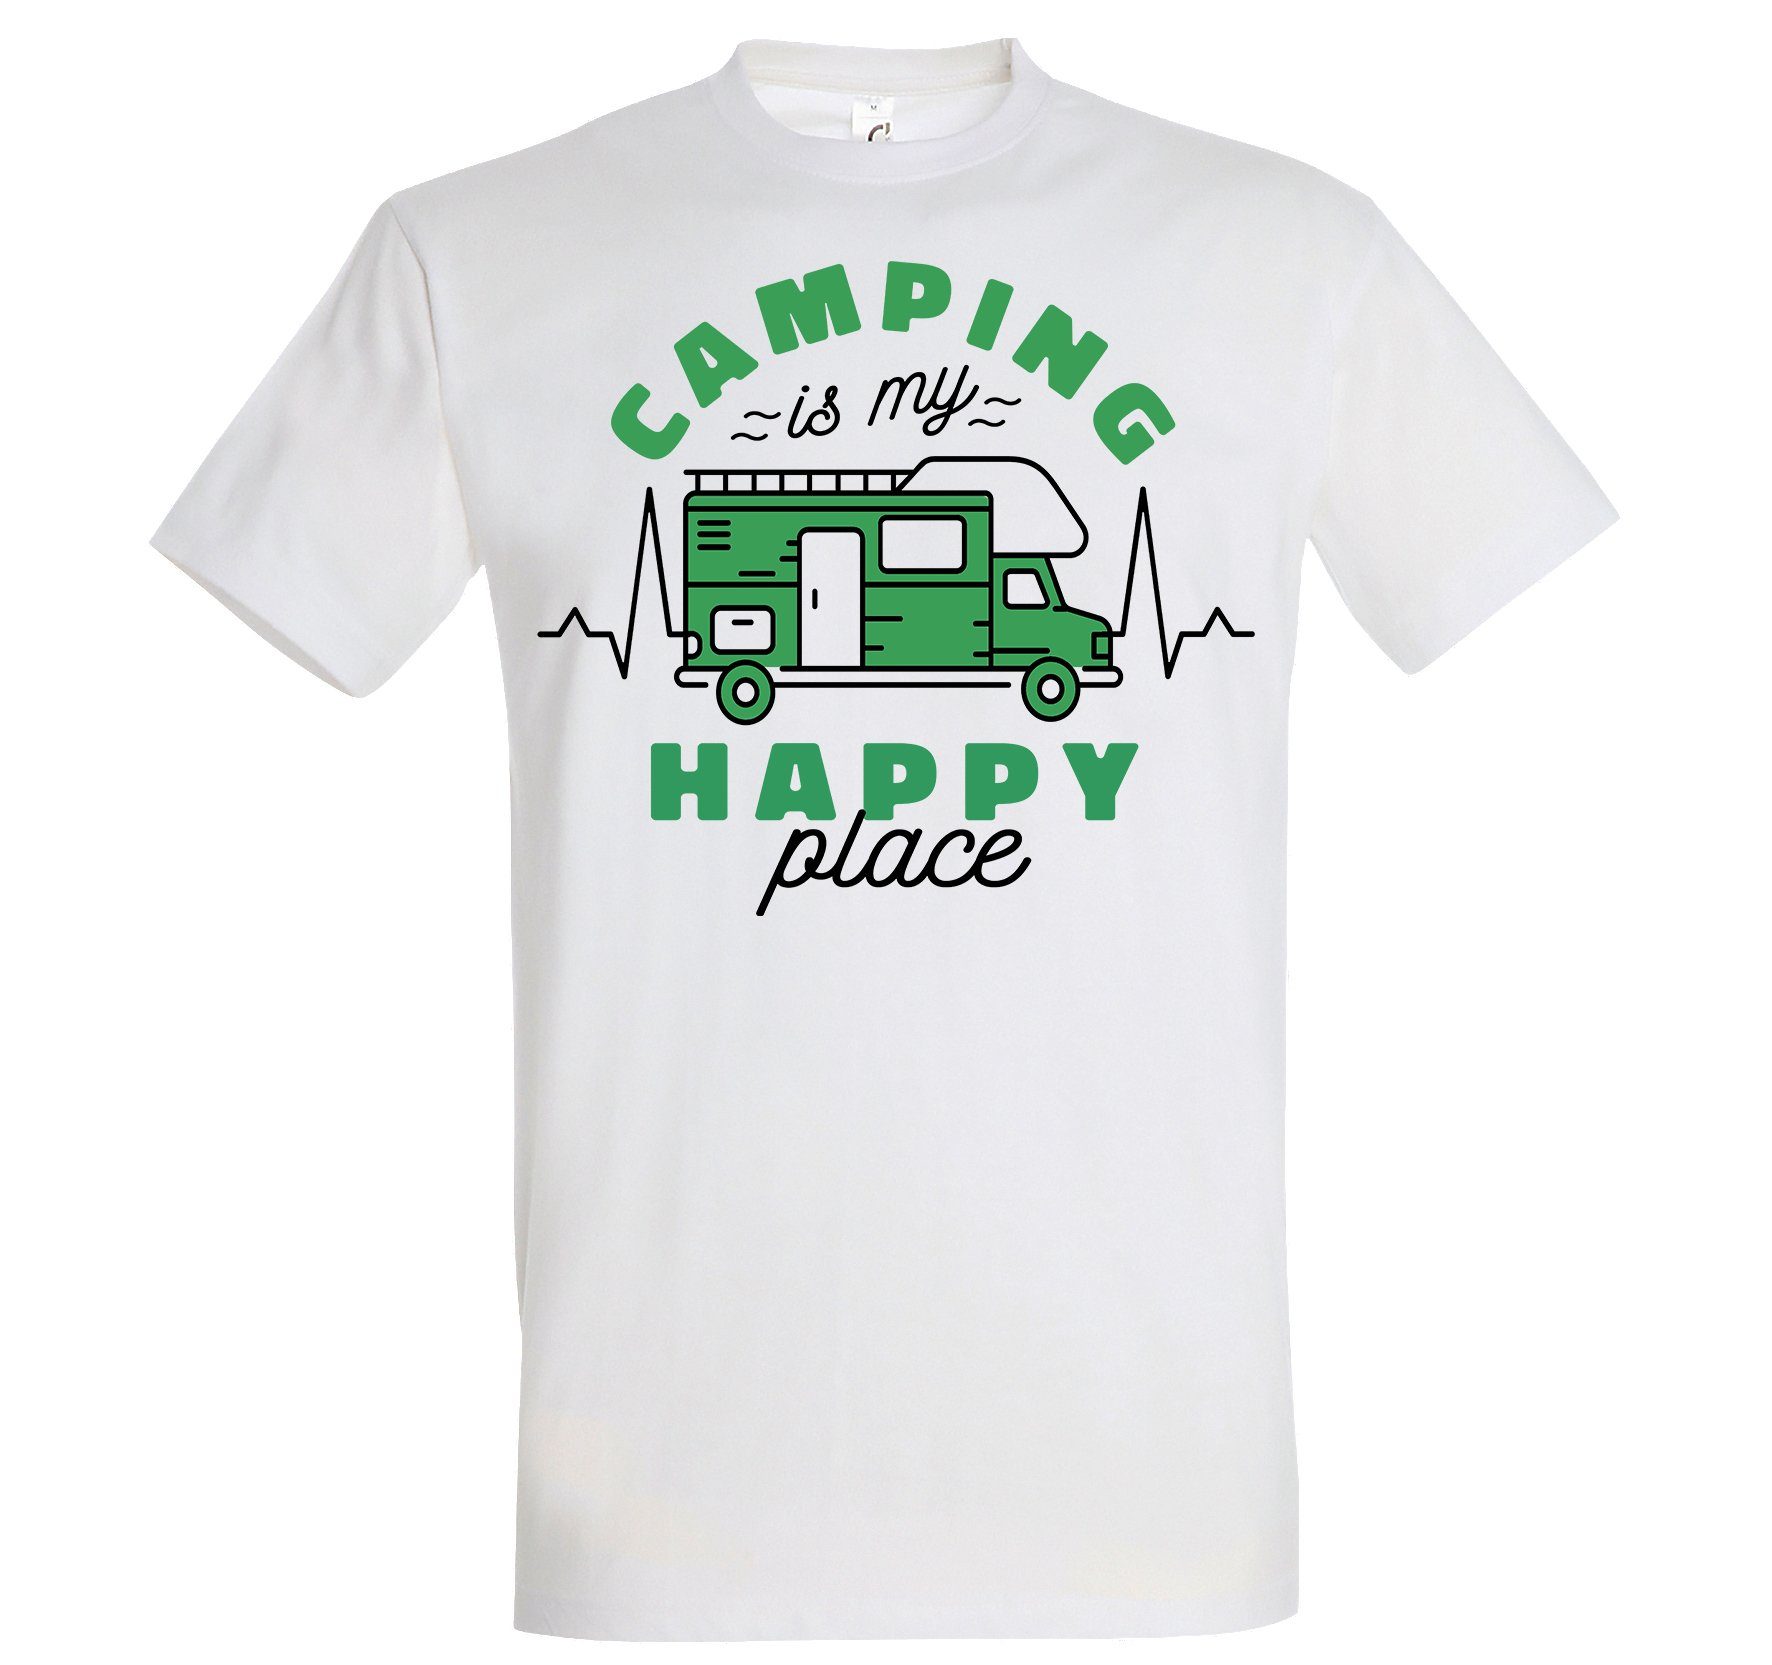 Weiss T-Shirt Motiv Designz is mit Happy Camping my trendigem Place Youth